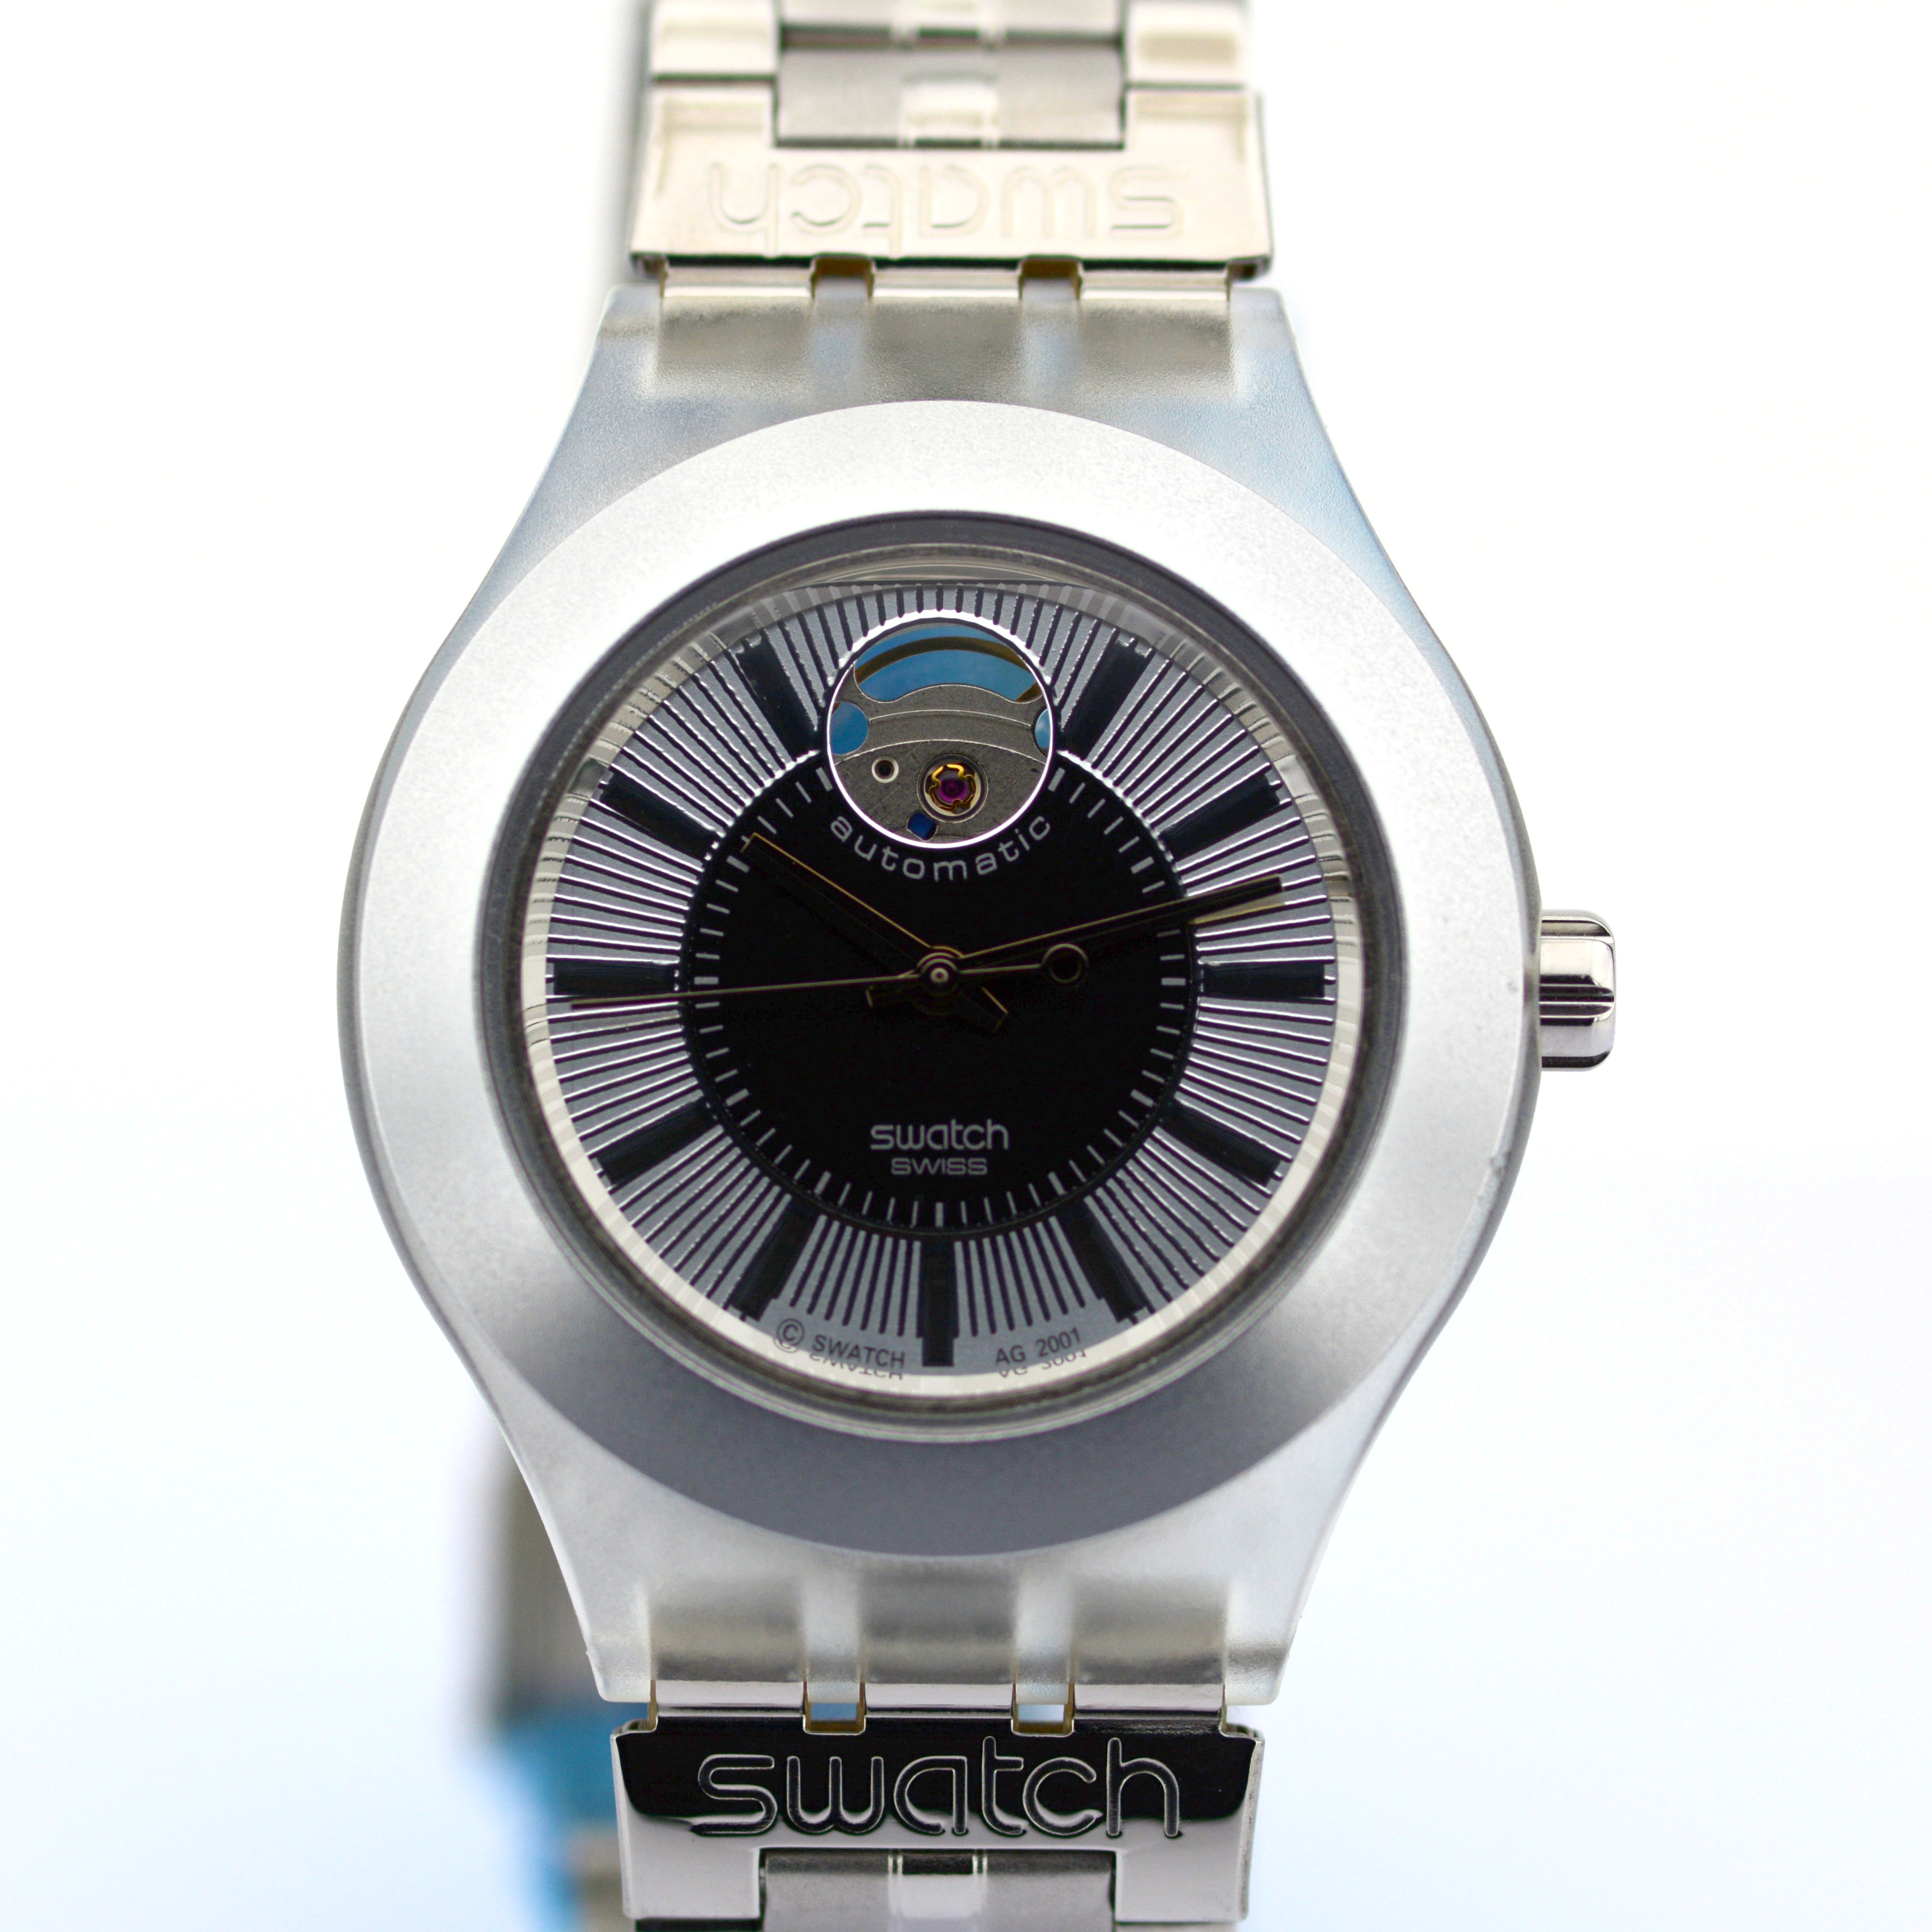 Swatch / Diaphane Irony Automatic - (Unworn) Unisex Steel Wrist Watch - Image 6 of 6